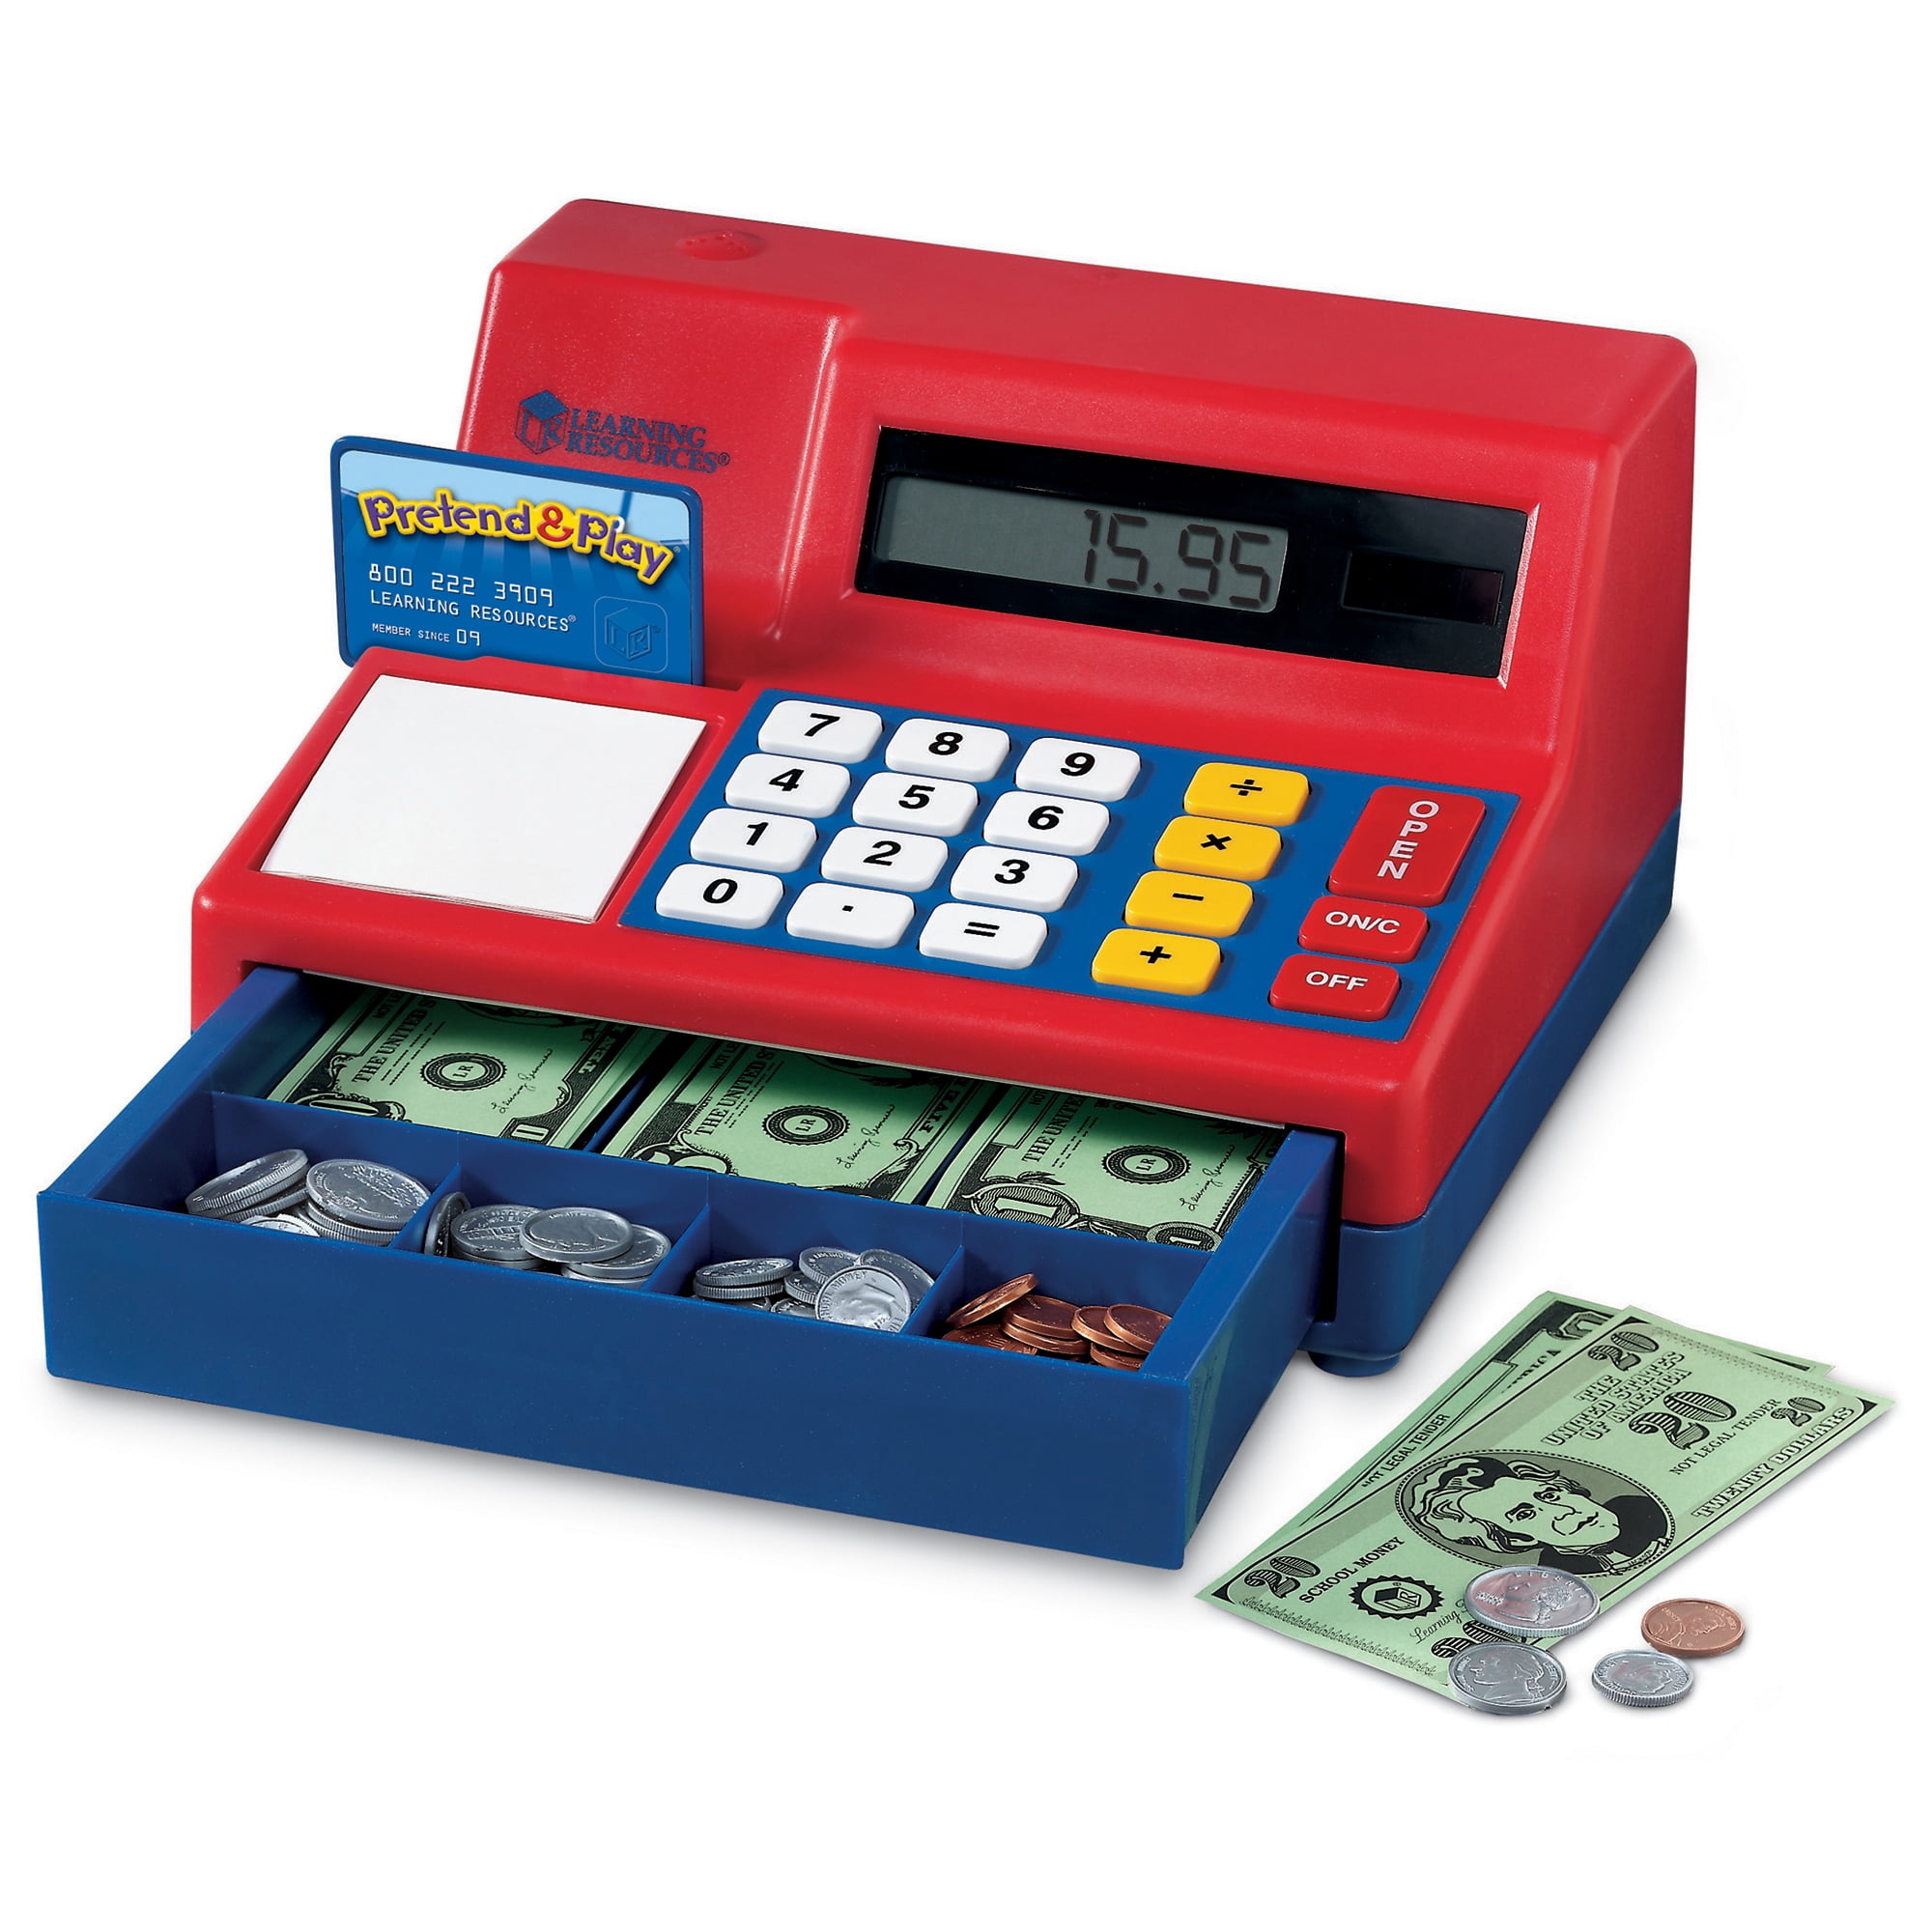 Play Money Cash with Tray Drawer 20 Coins 20 Bills Kids Pretend Toy Fake Money. 